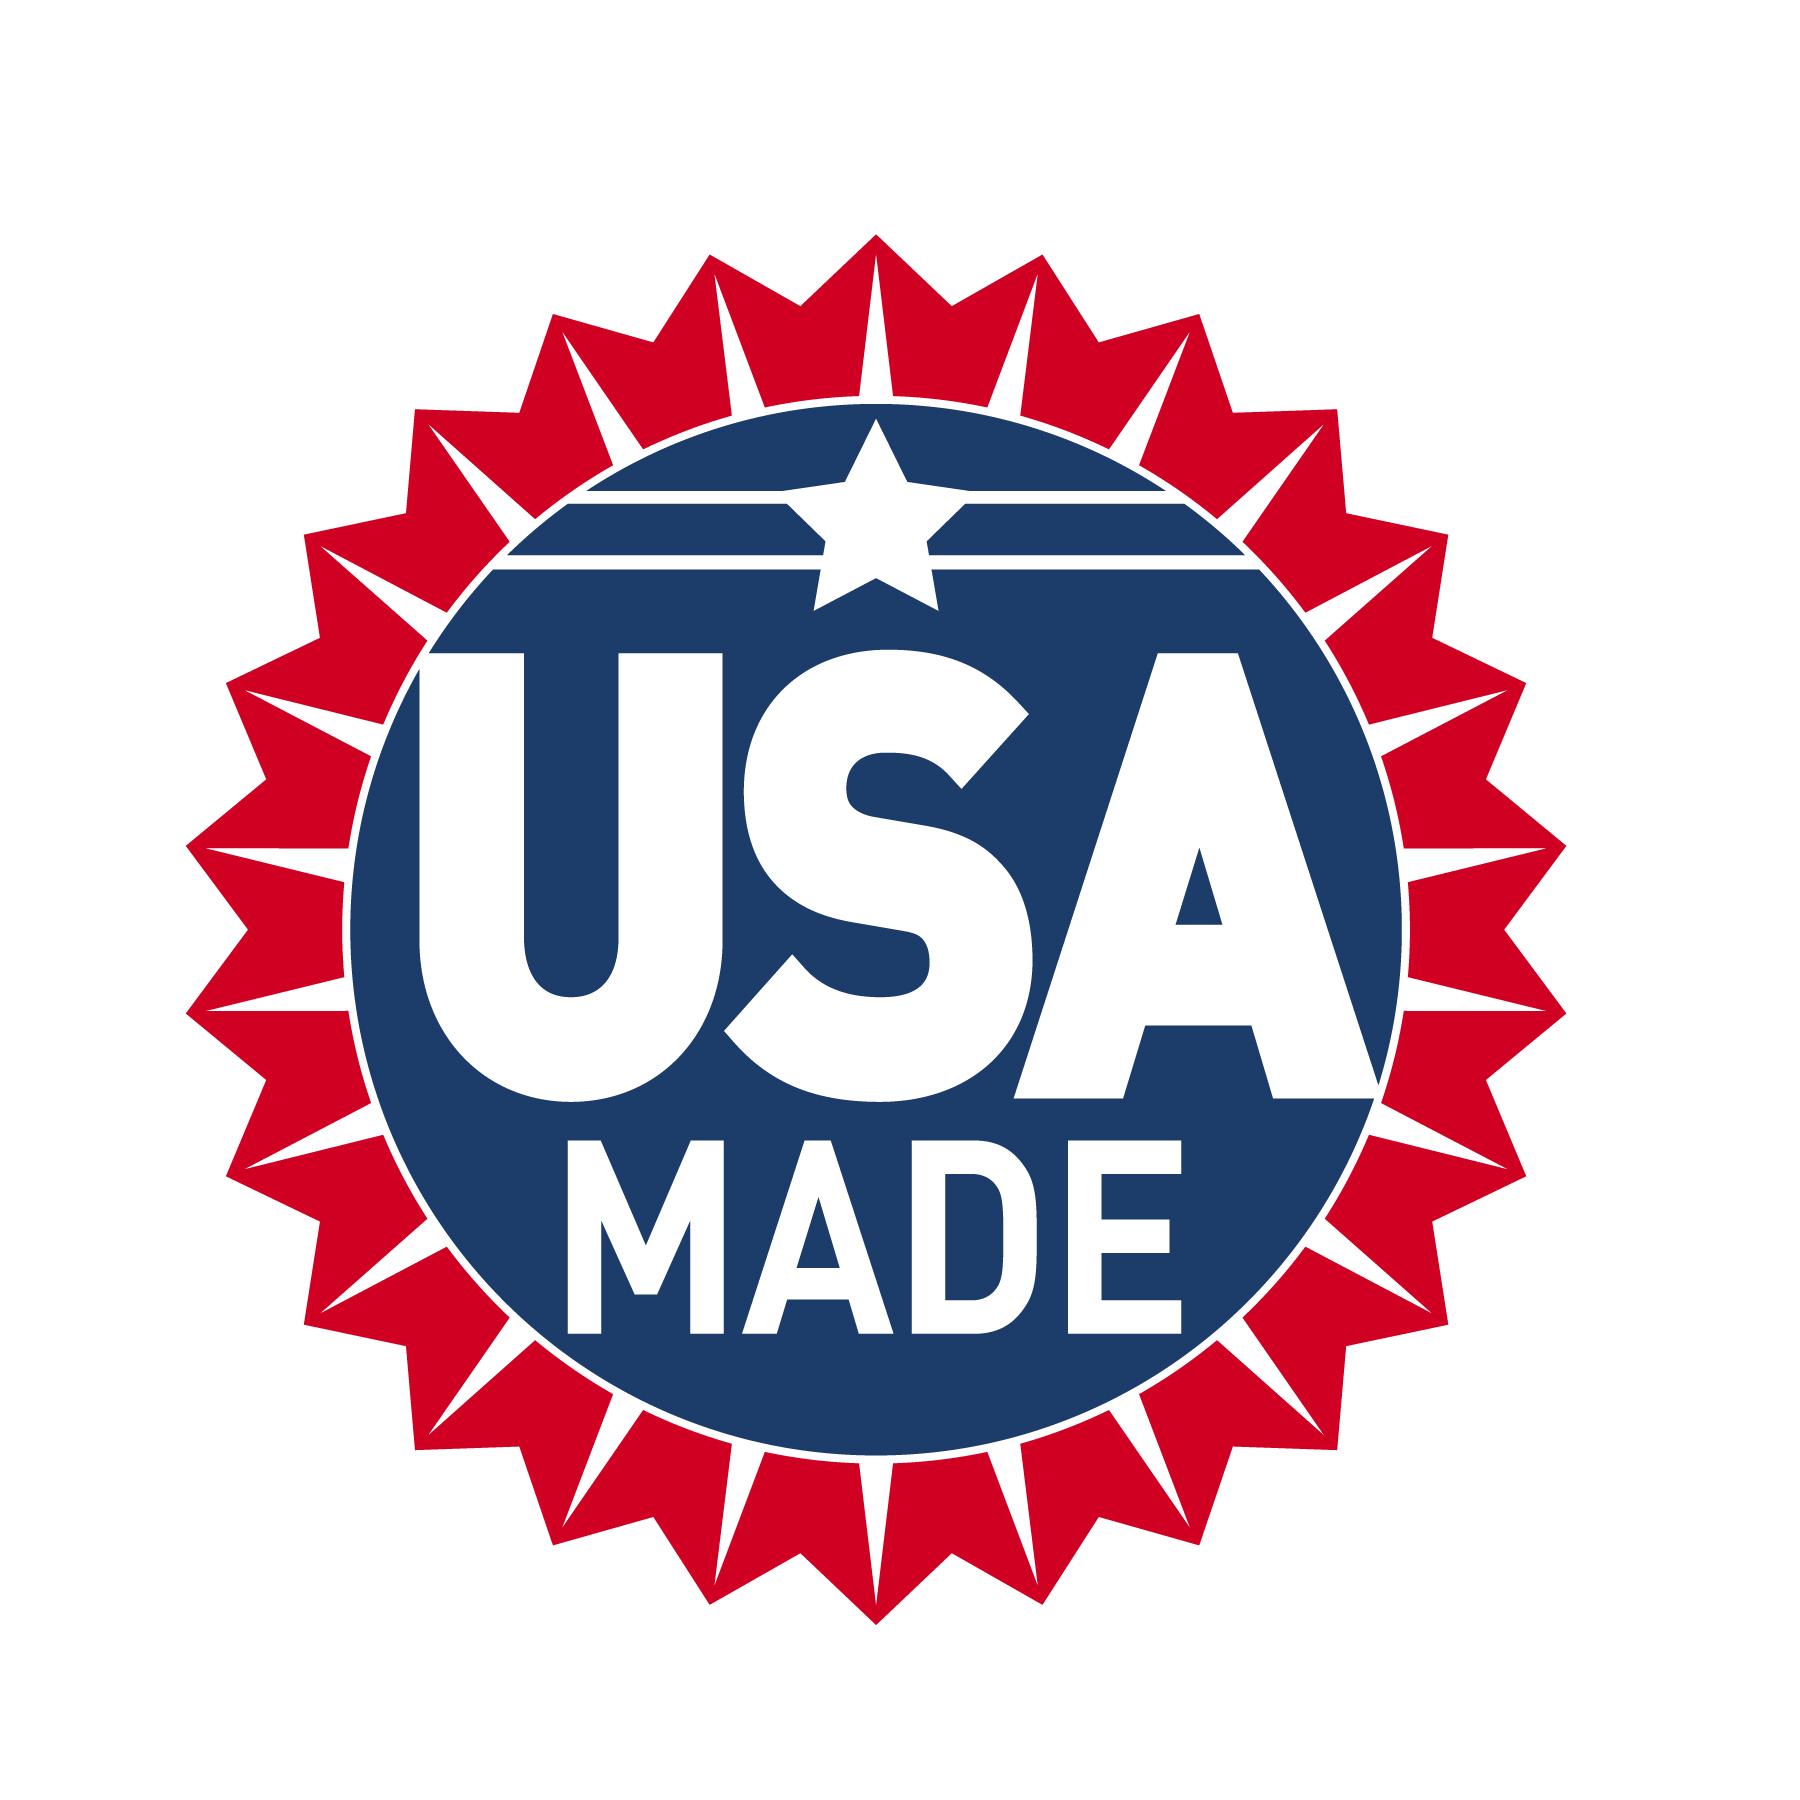 U.S.a. Logo - Made in USA Logo Design | Dowload Vector Art | Royalty-Free